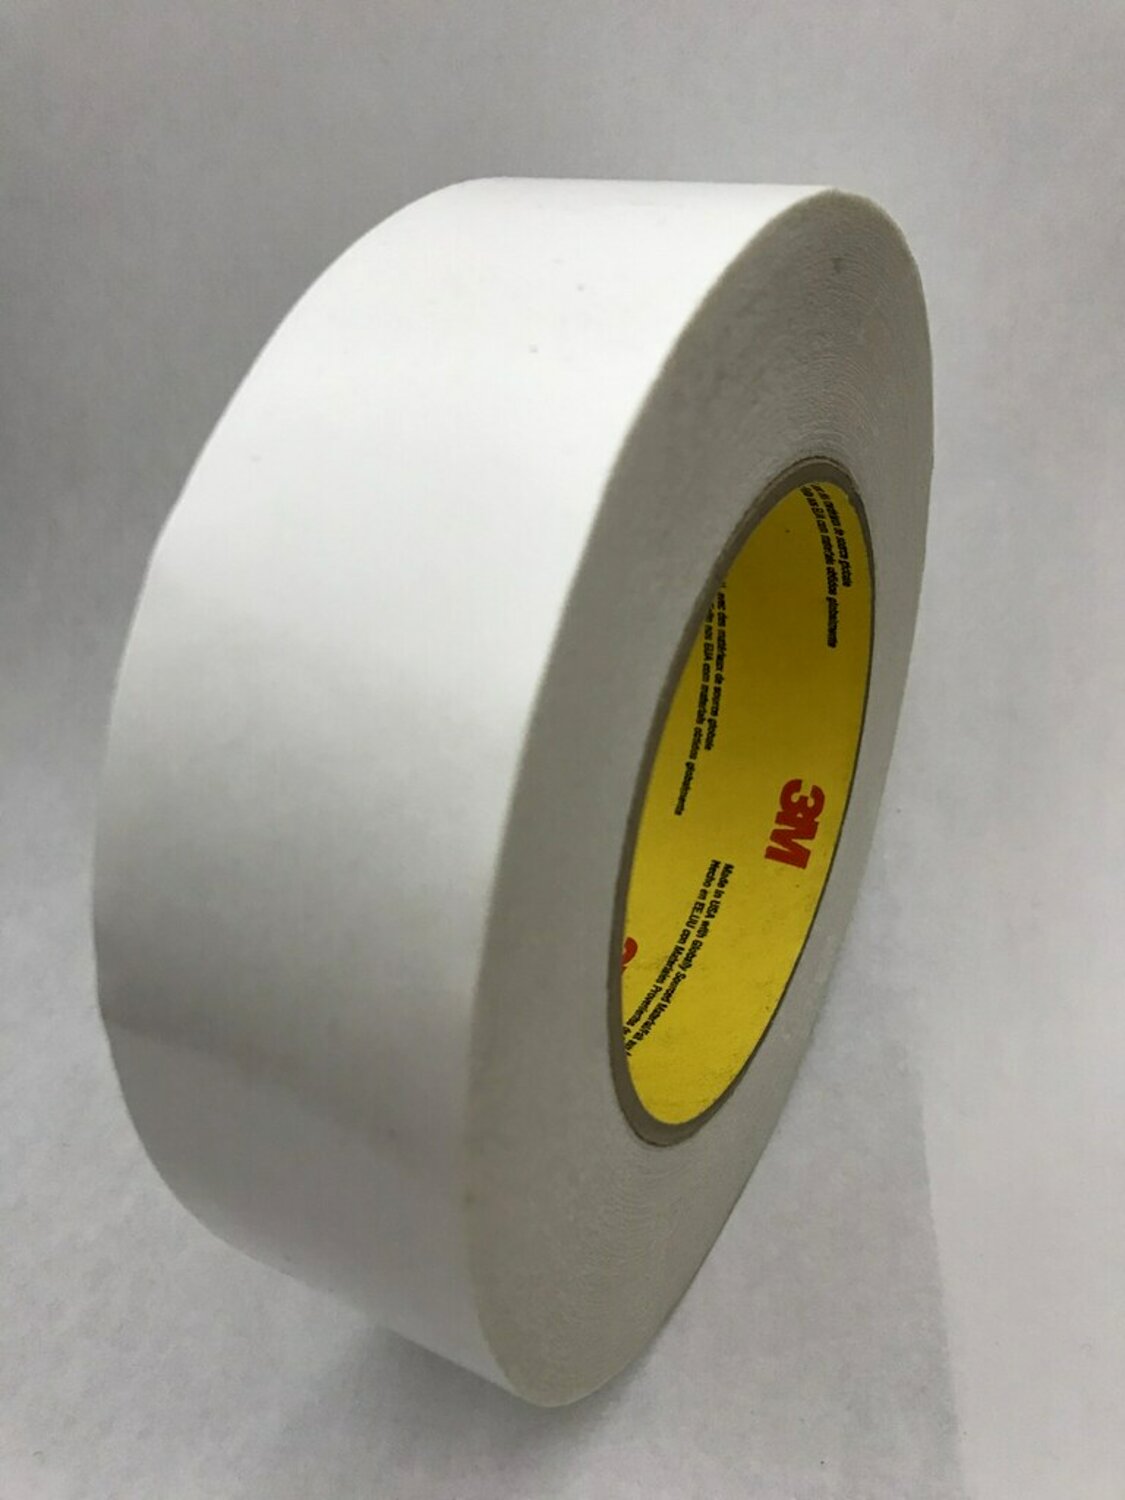 7100043860 - 3M Venture Tape Double Coated PET Tape 514CW, 1 1/2 in x 500 yd, 0.5
mil, 4 rolls per case